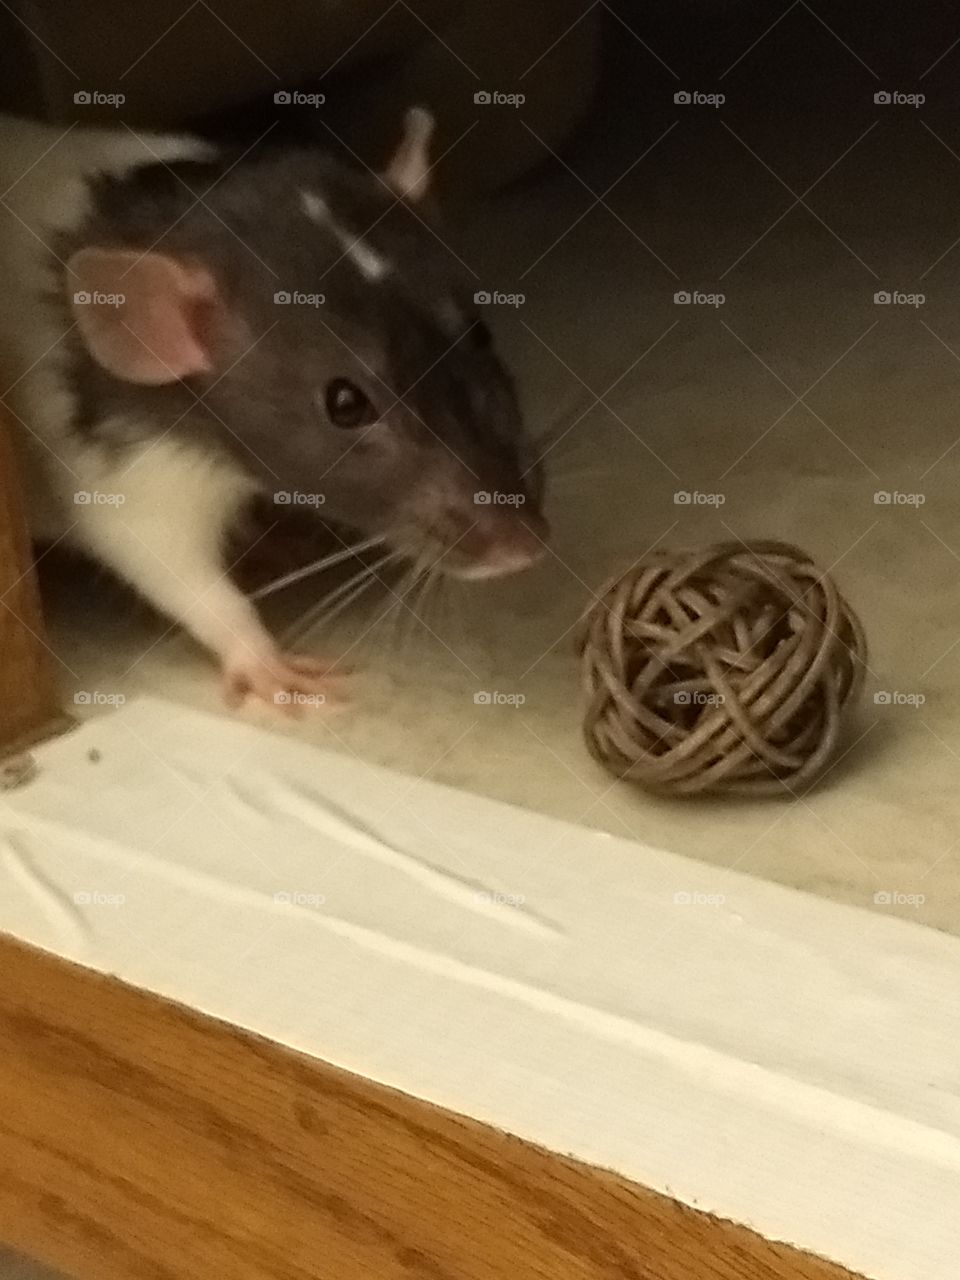 My pet rat, Bonnie, playing ball